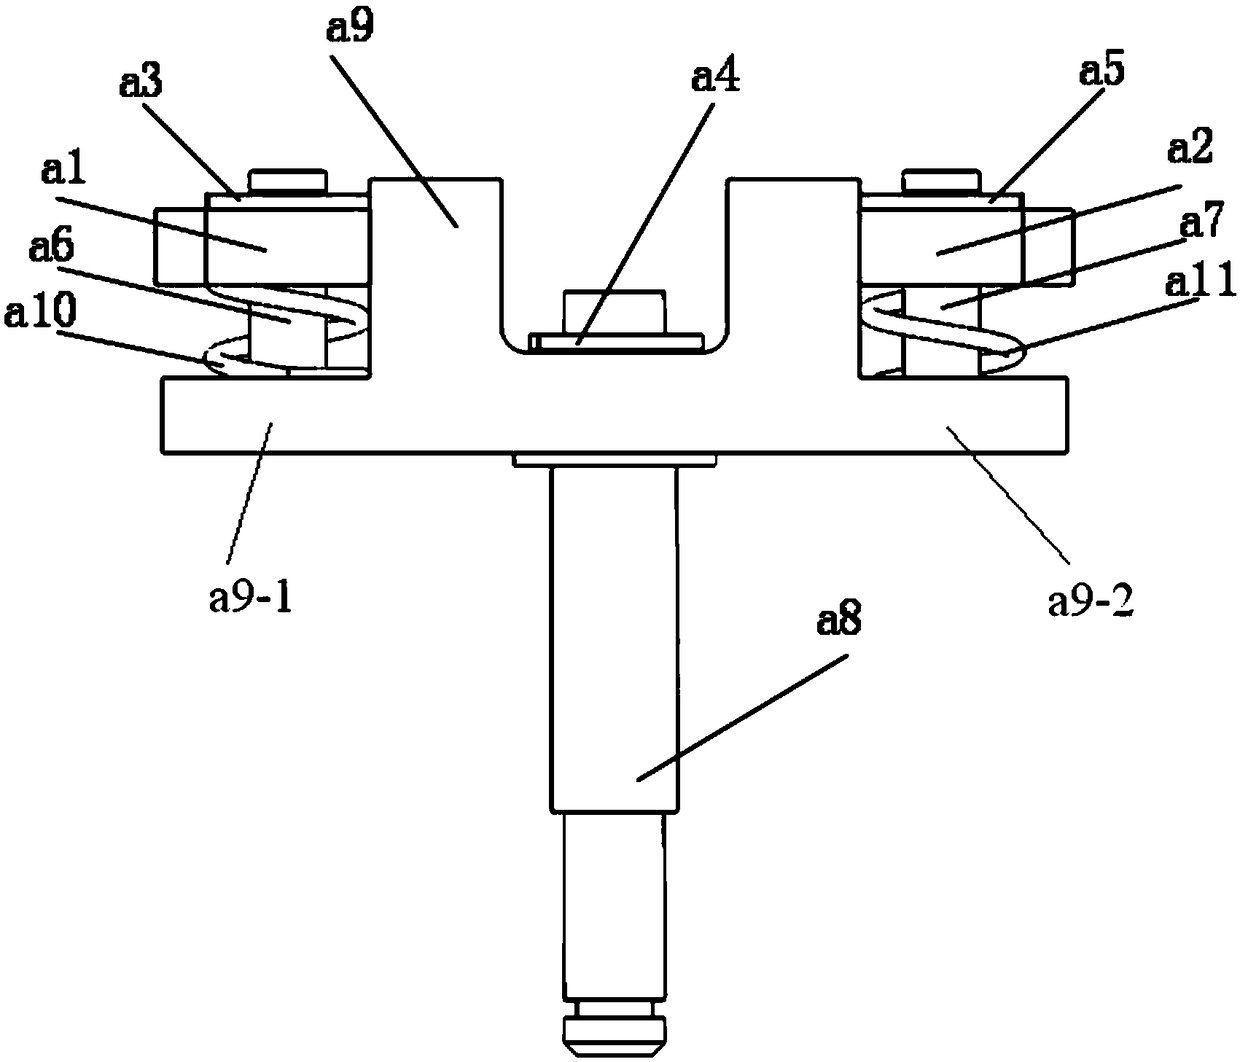 Contact mechanism in four-breakpoint contactor